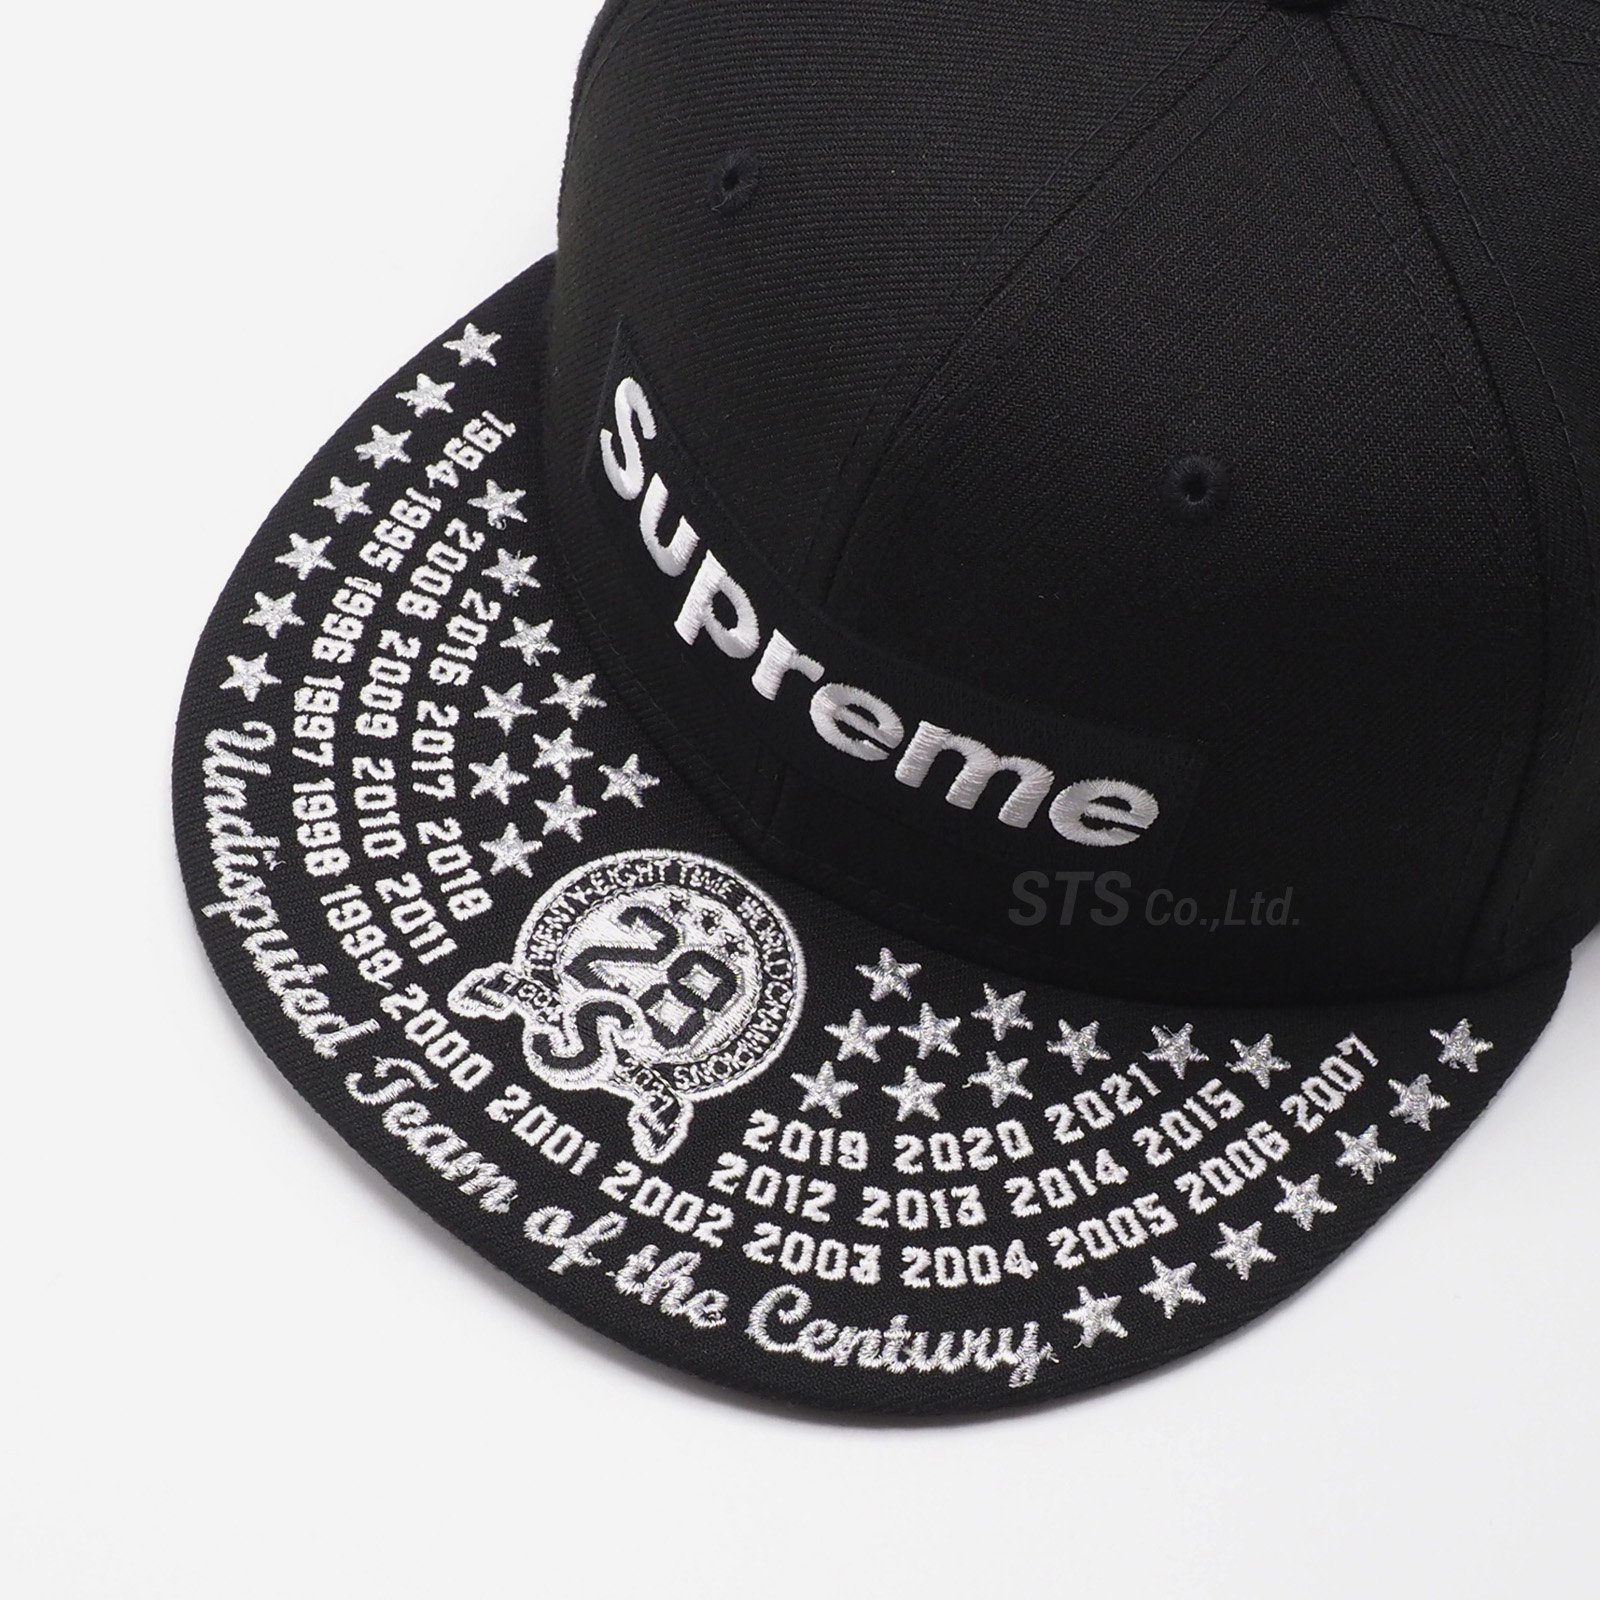 Supreme, Accessories, Supreme Undisputed Box Logo New Era Fitted Hat